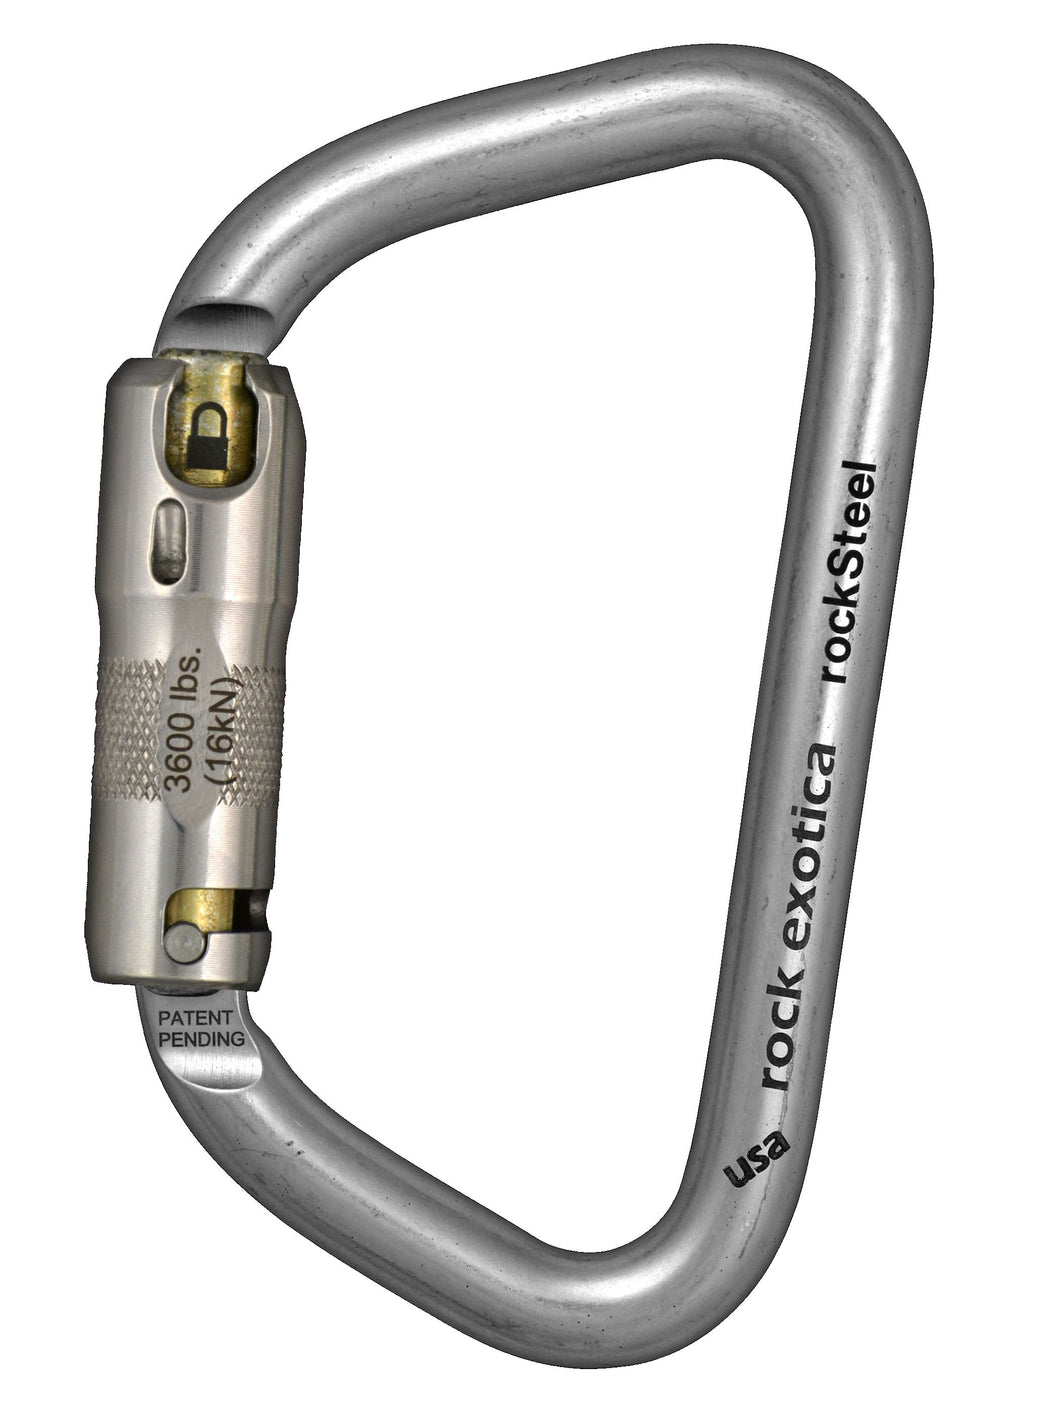 rockSteel Auto-Lock Carabiner